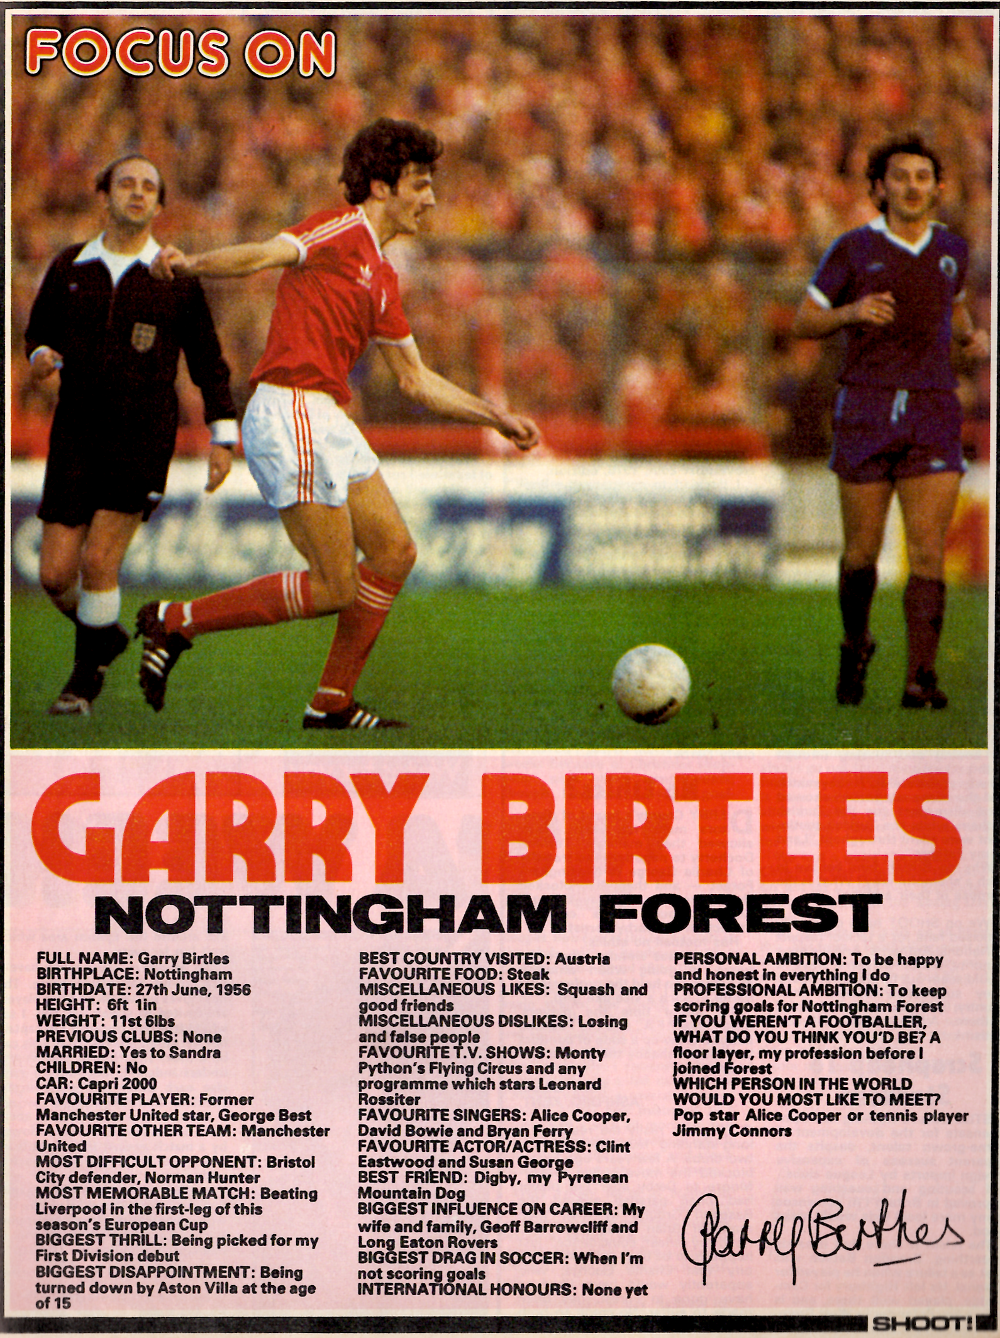 TOPPS 1979 FOOTBALL CARD #221 NOTTINGHAM FOREST GARY BIRTLES 